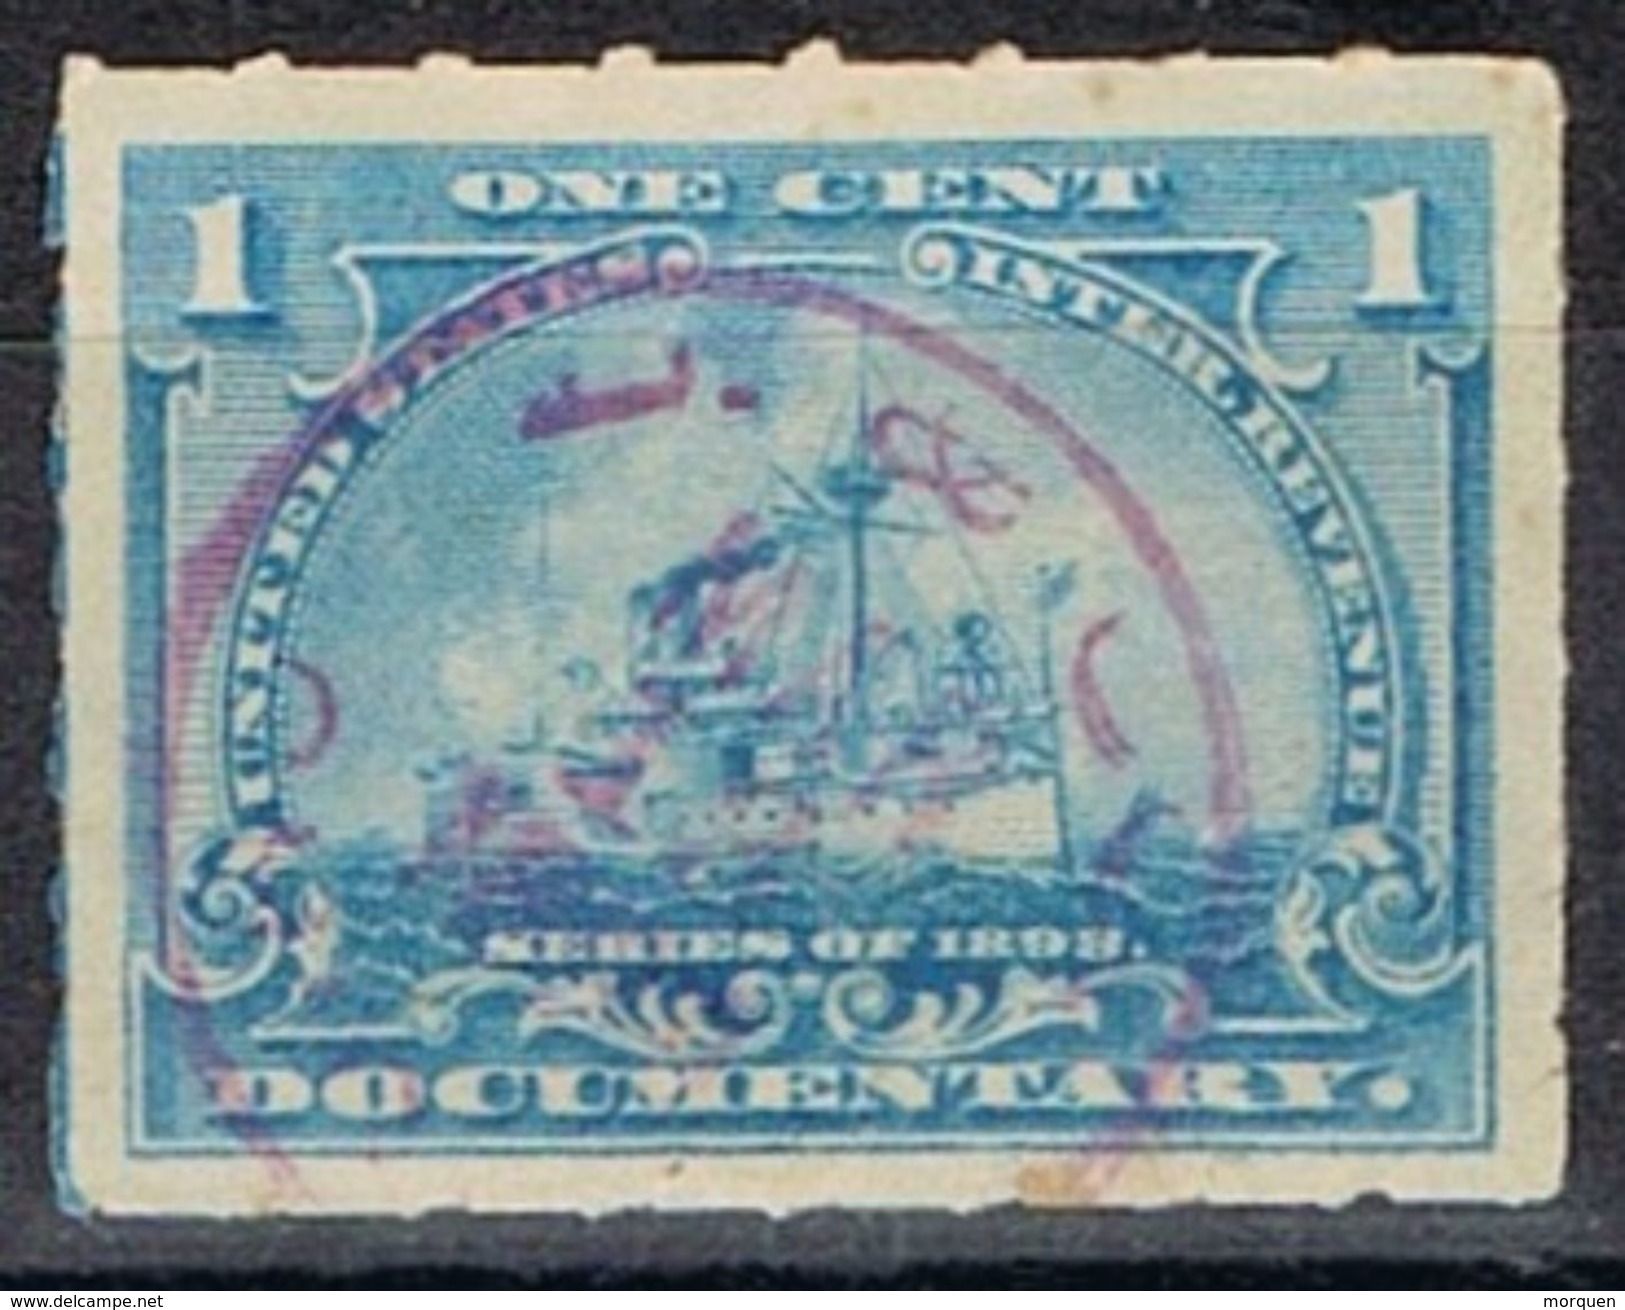 Sello DOCUMENTARY U.S.A. 1 Ctvos 1898. Ship º - Revenues